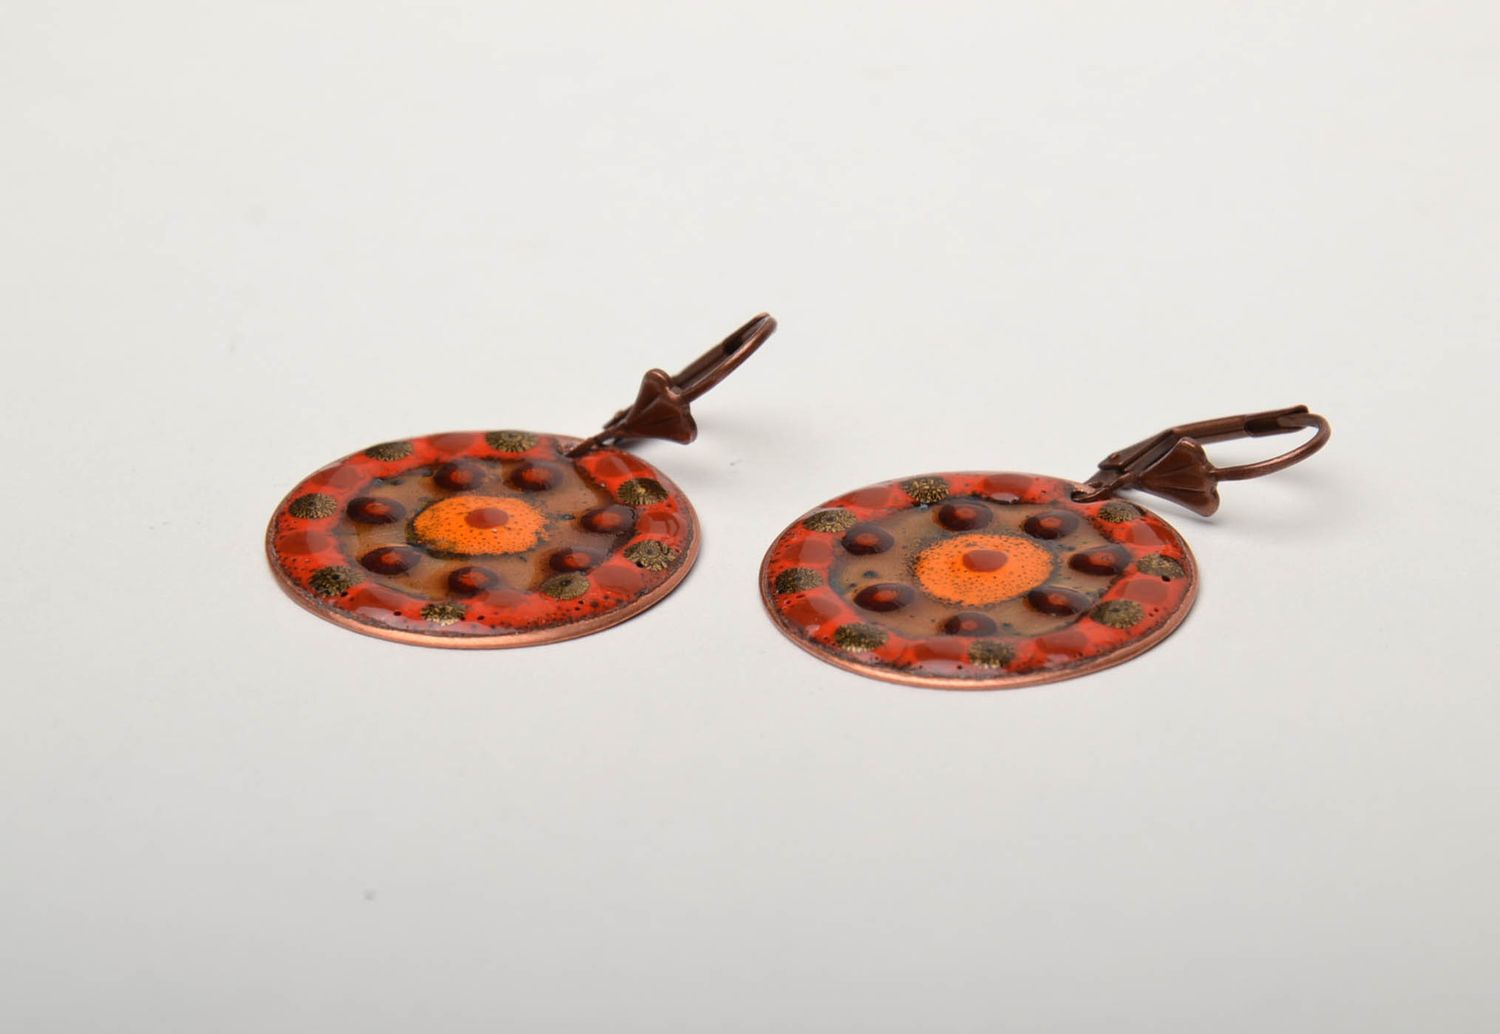 Handmade Ohrringe aus Kupfer foto 4